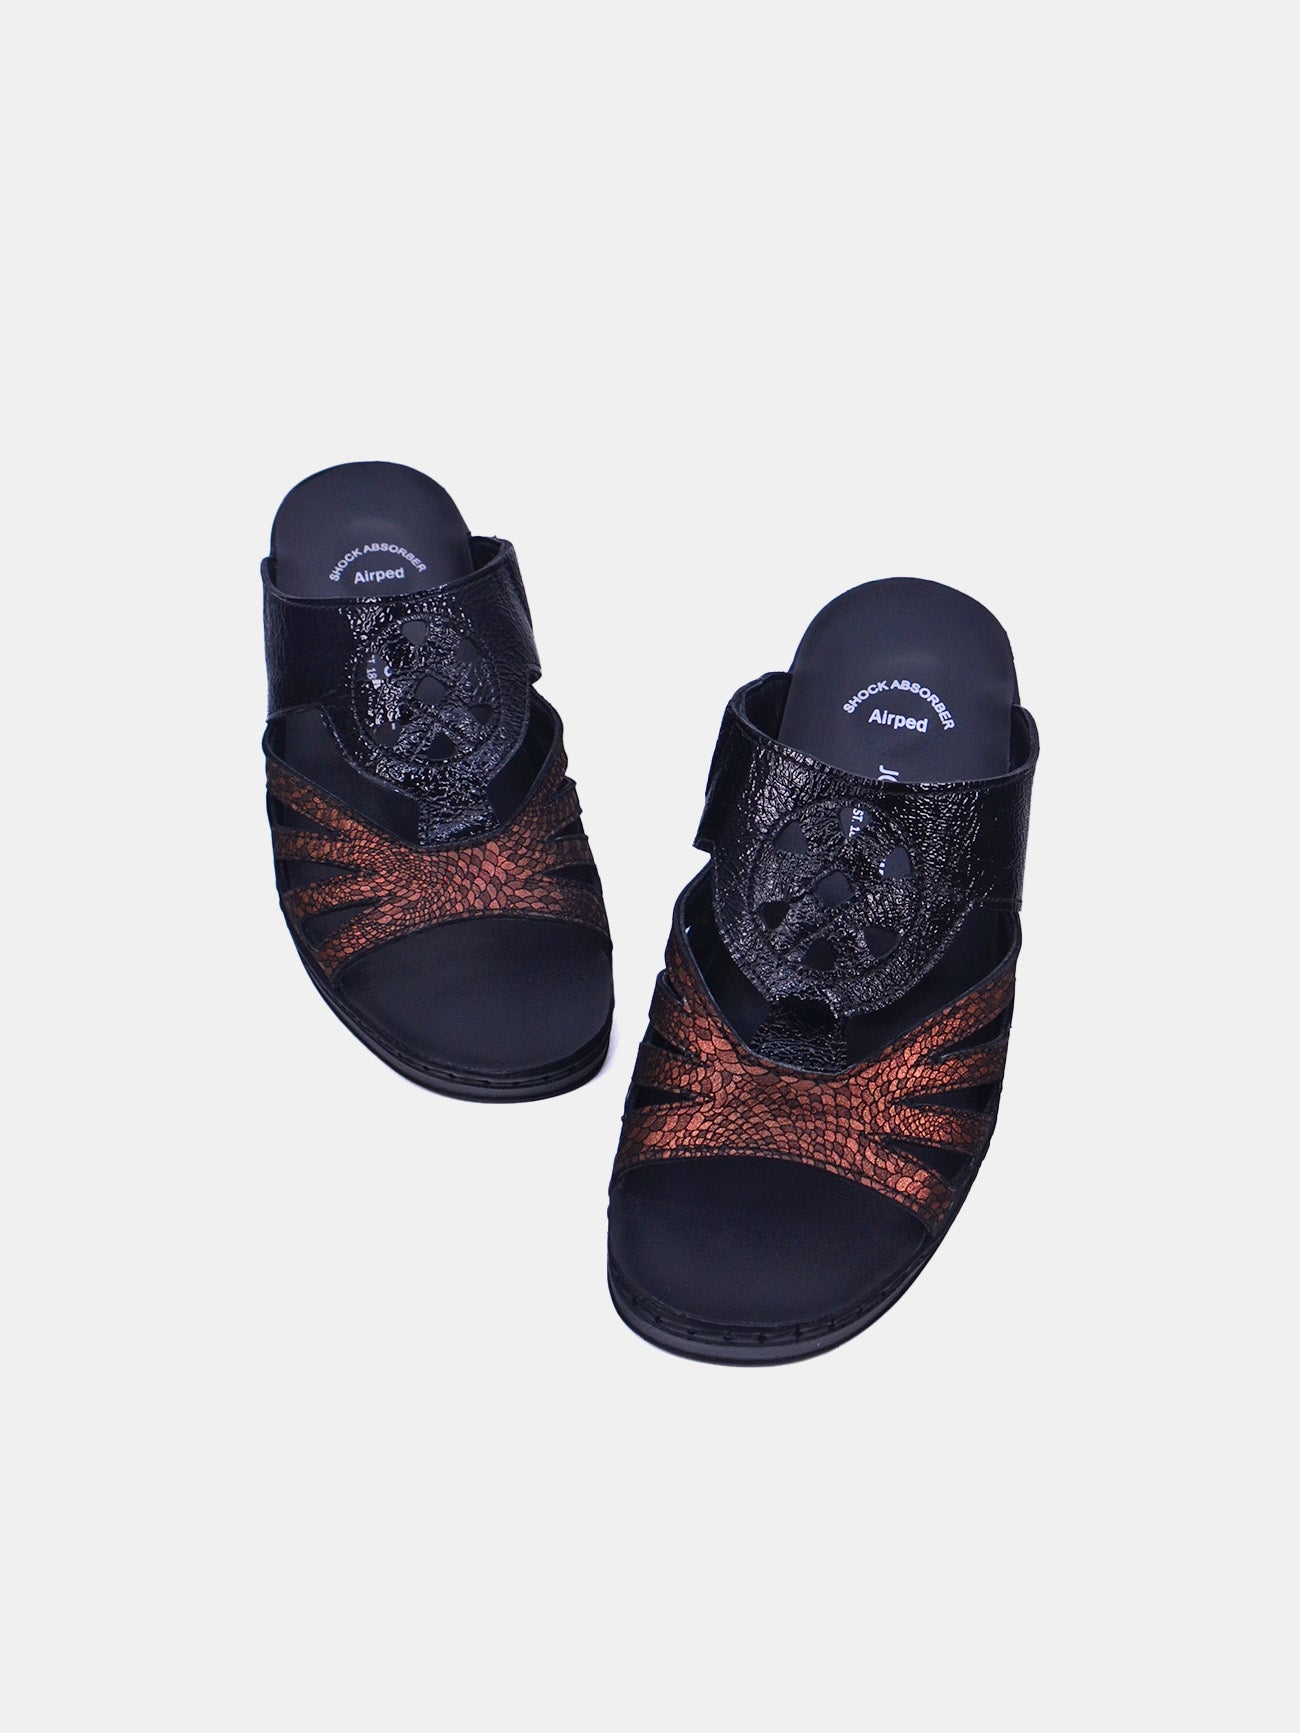 Josef Seibel 08827 Women's Flat Sandals #color_Black